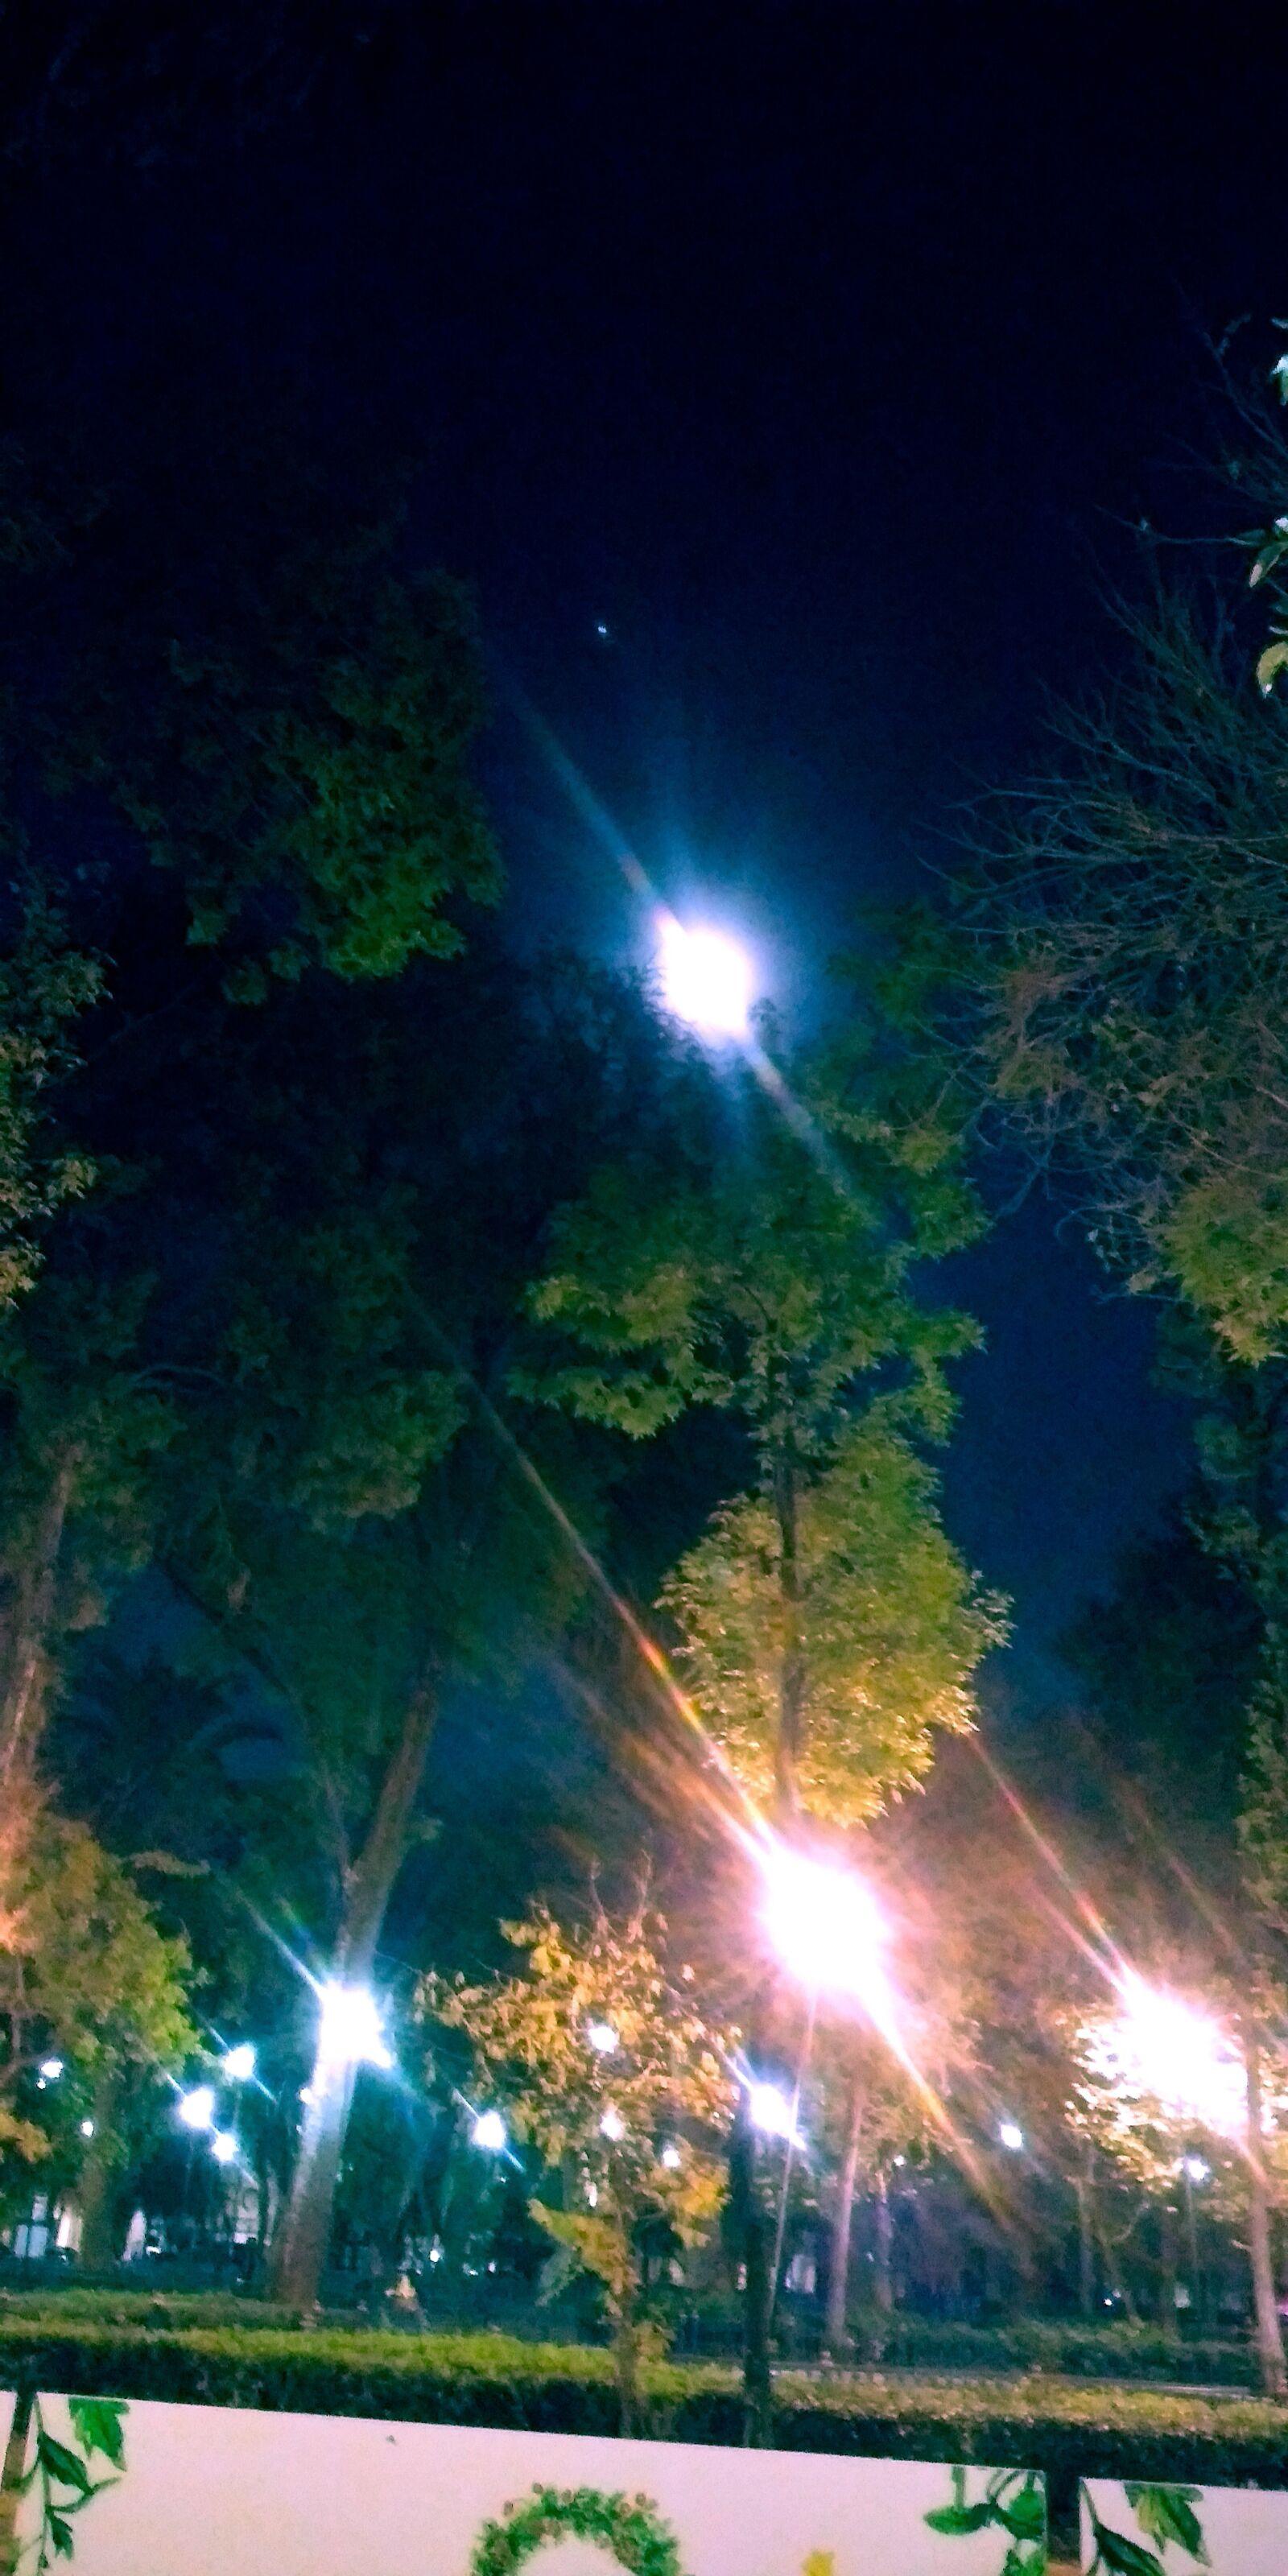 LG Q6 sample photo. Noche, luna, parque photography